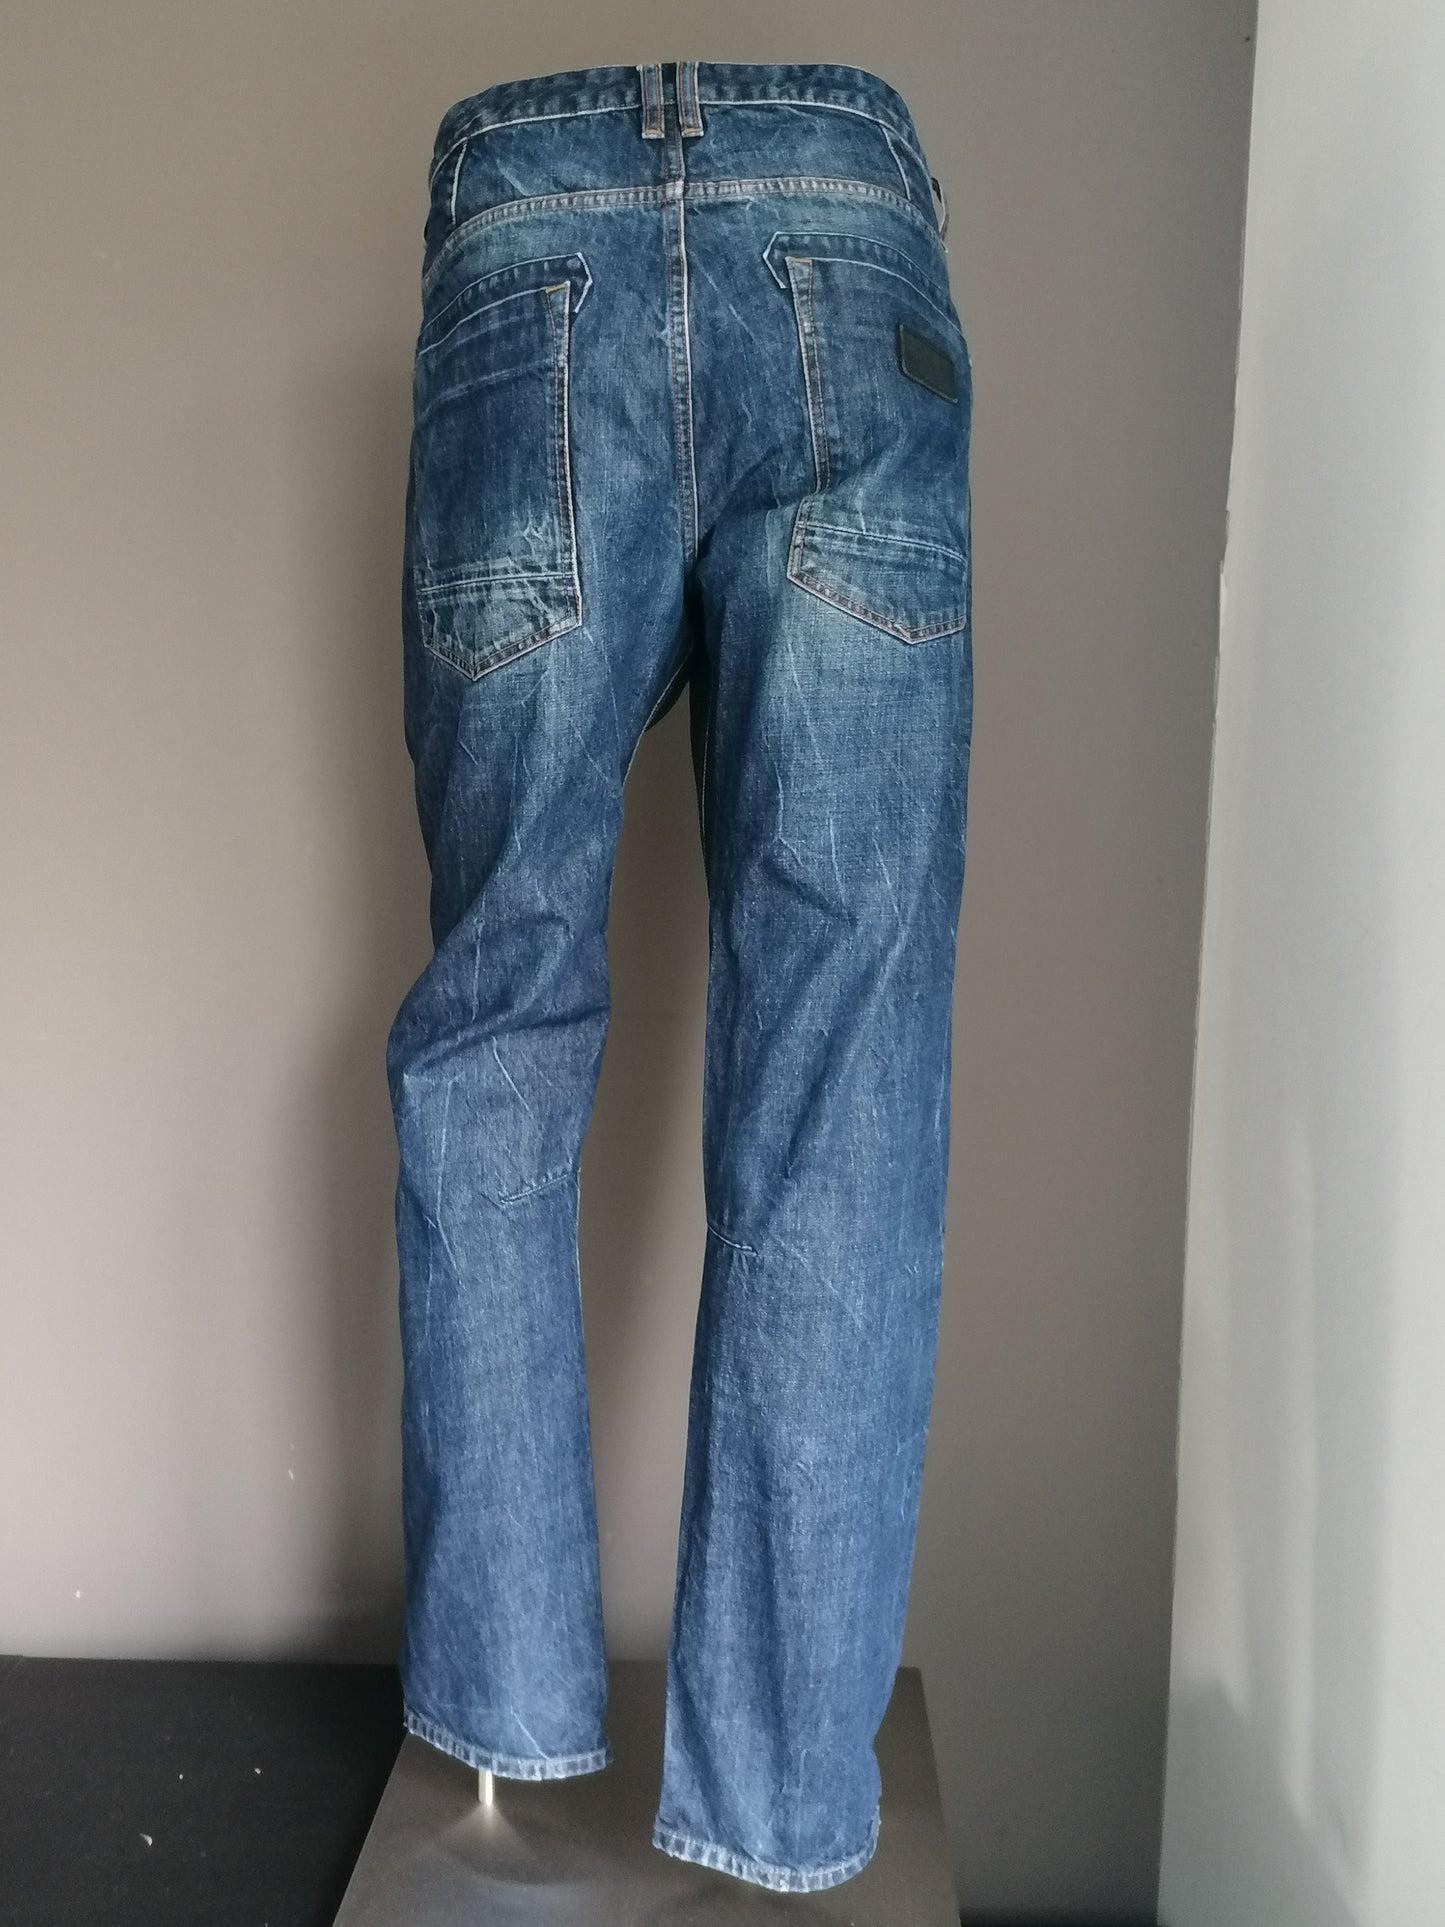 SilverCreek Jeans. Color azul oscuro. Tamaño W38 - L34. Tipo de carpintero